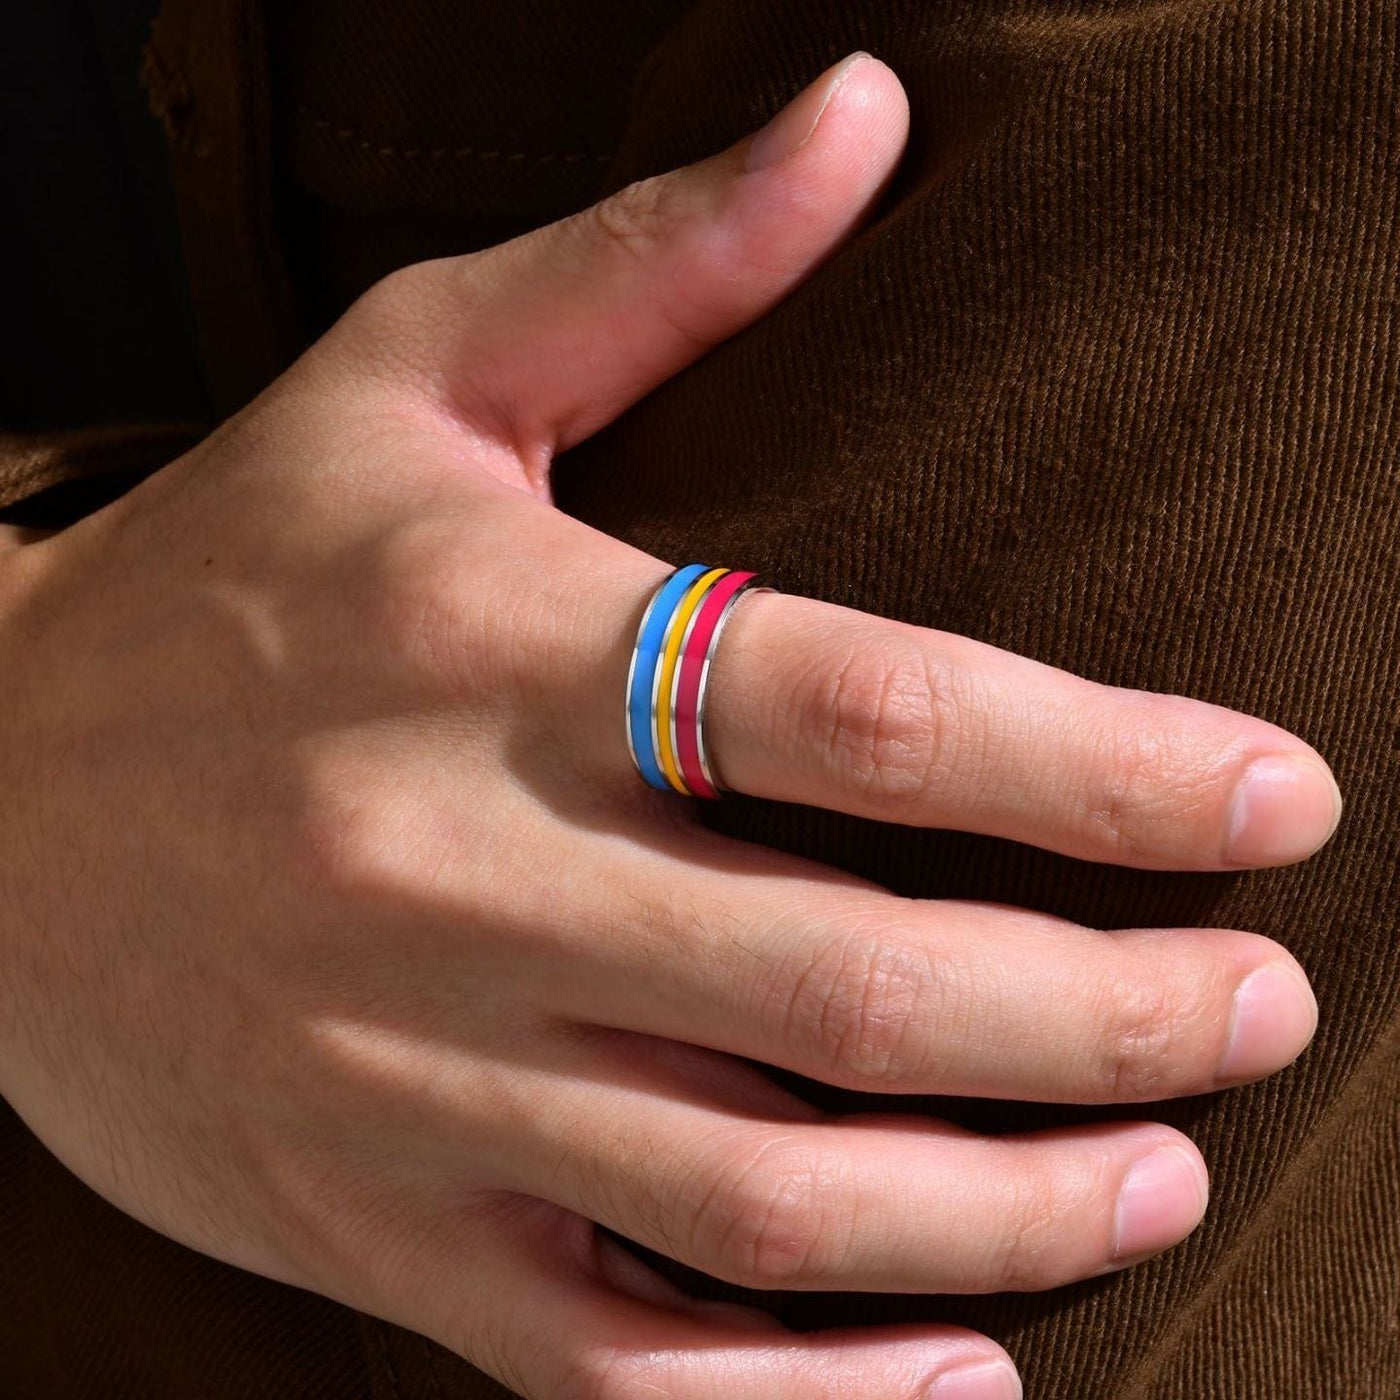 Pansexual Pride Ring